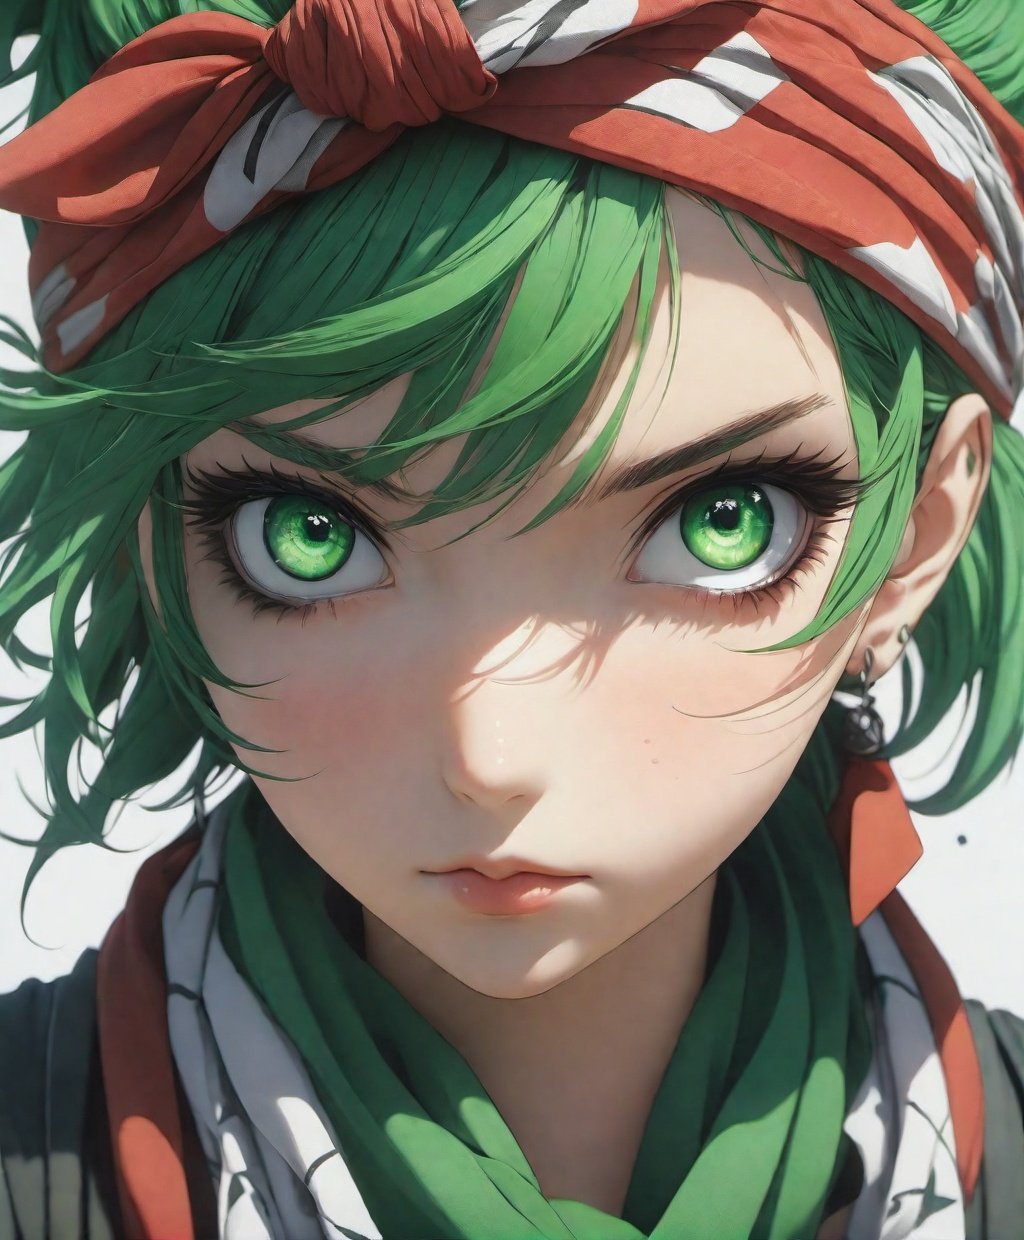 Anime Style by Eiichirō Oda Character, extreme-detailed ODD eyes, portrait, 8k, female character with green ODD eyes, green hair, bandana